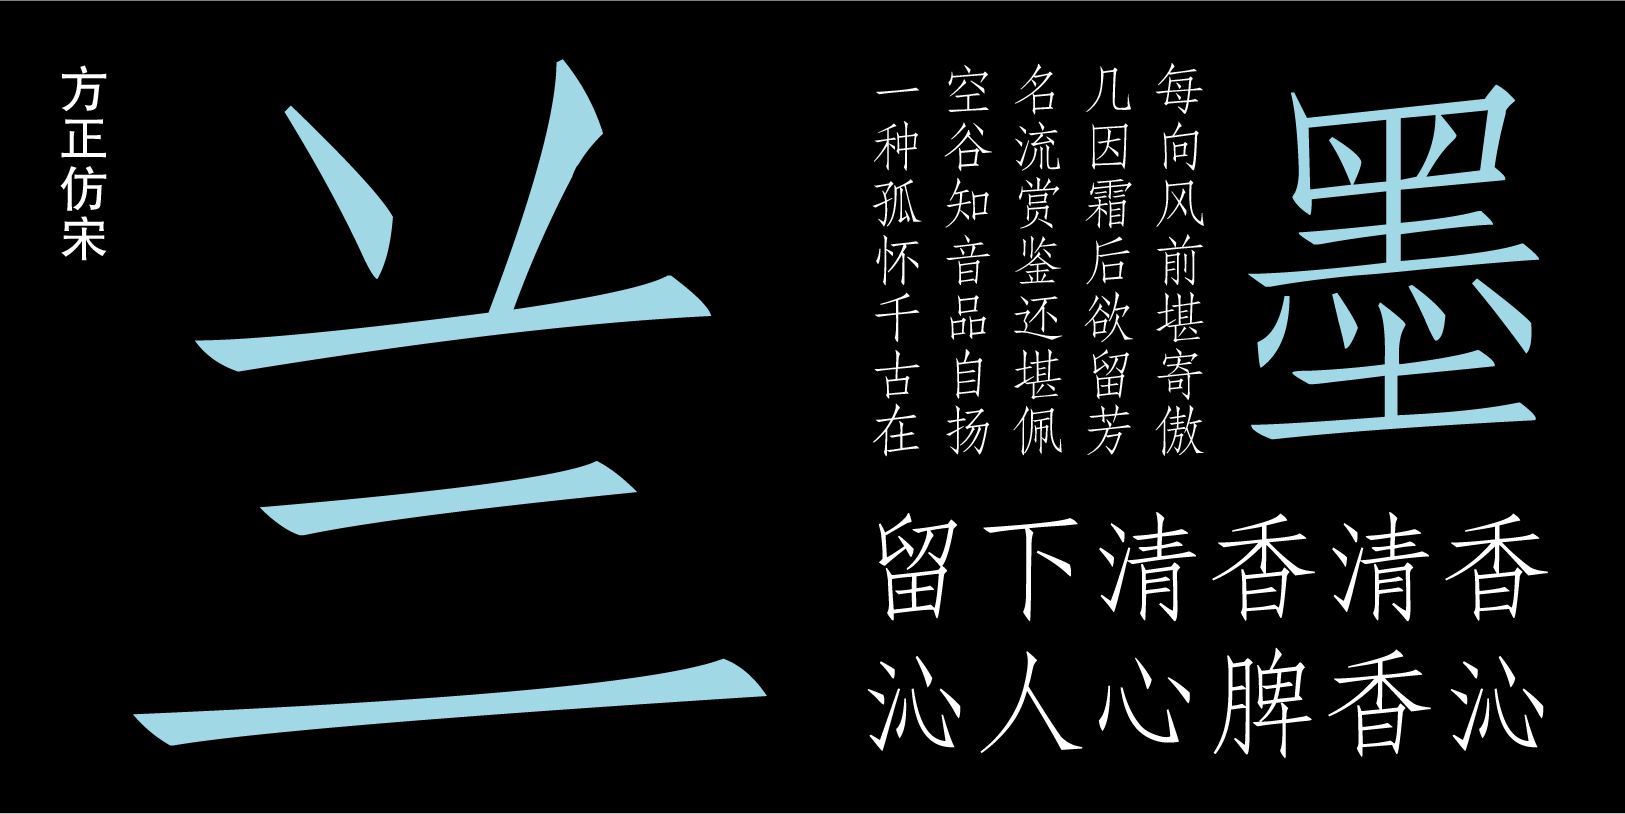 Card displaying Fāng Zhèng Fǎng Sòng typeface in various styles